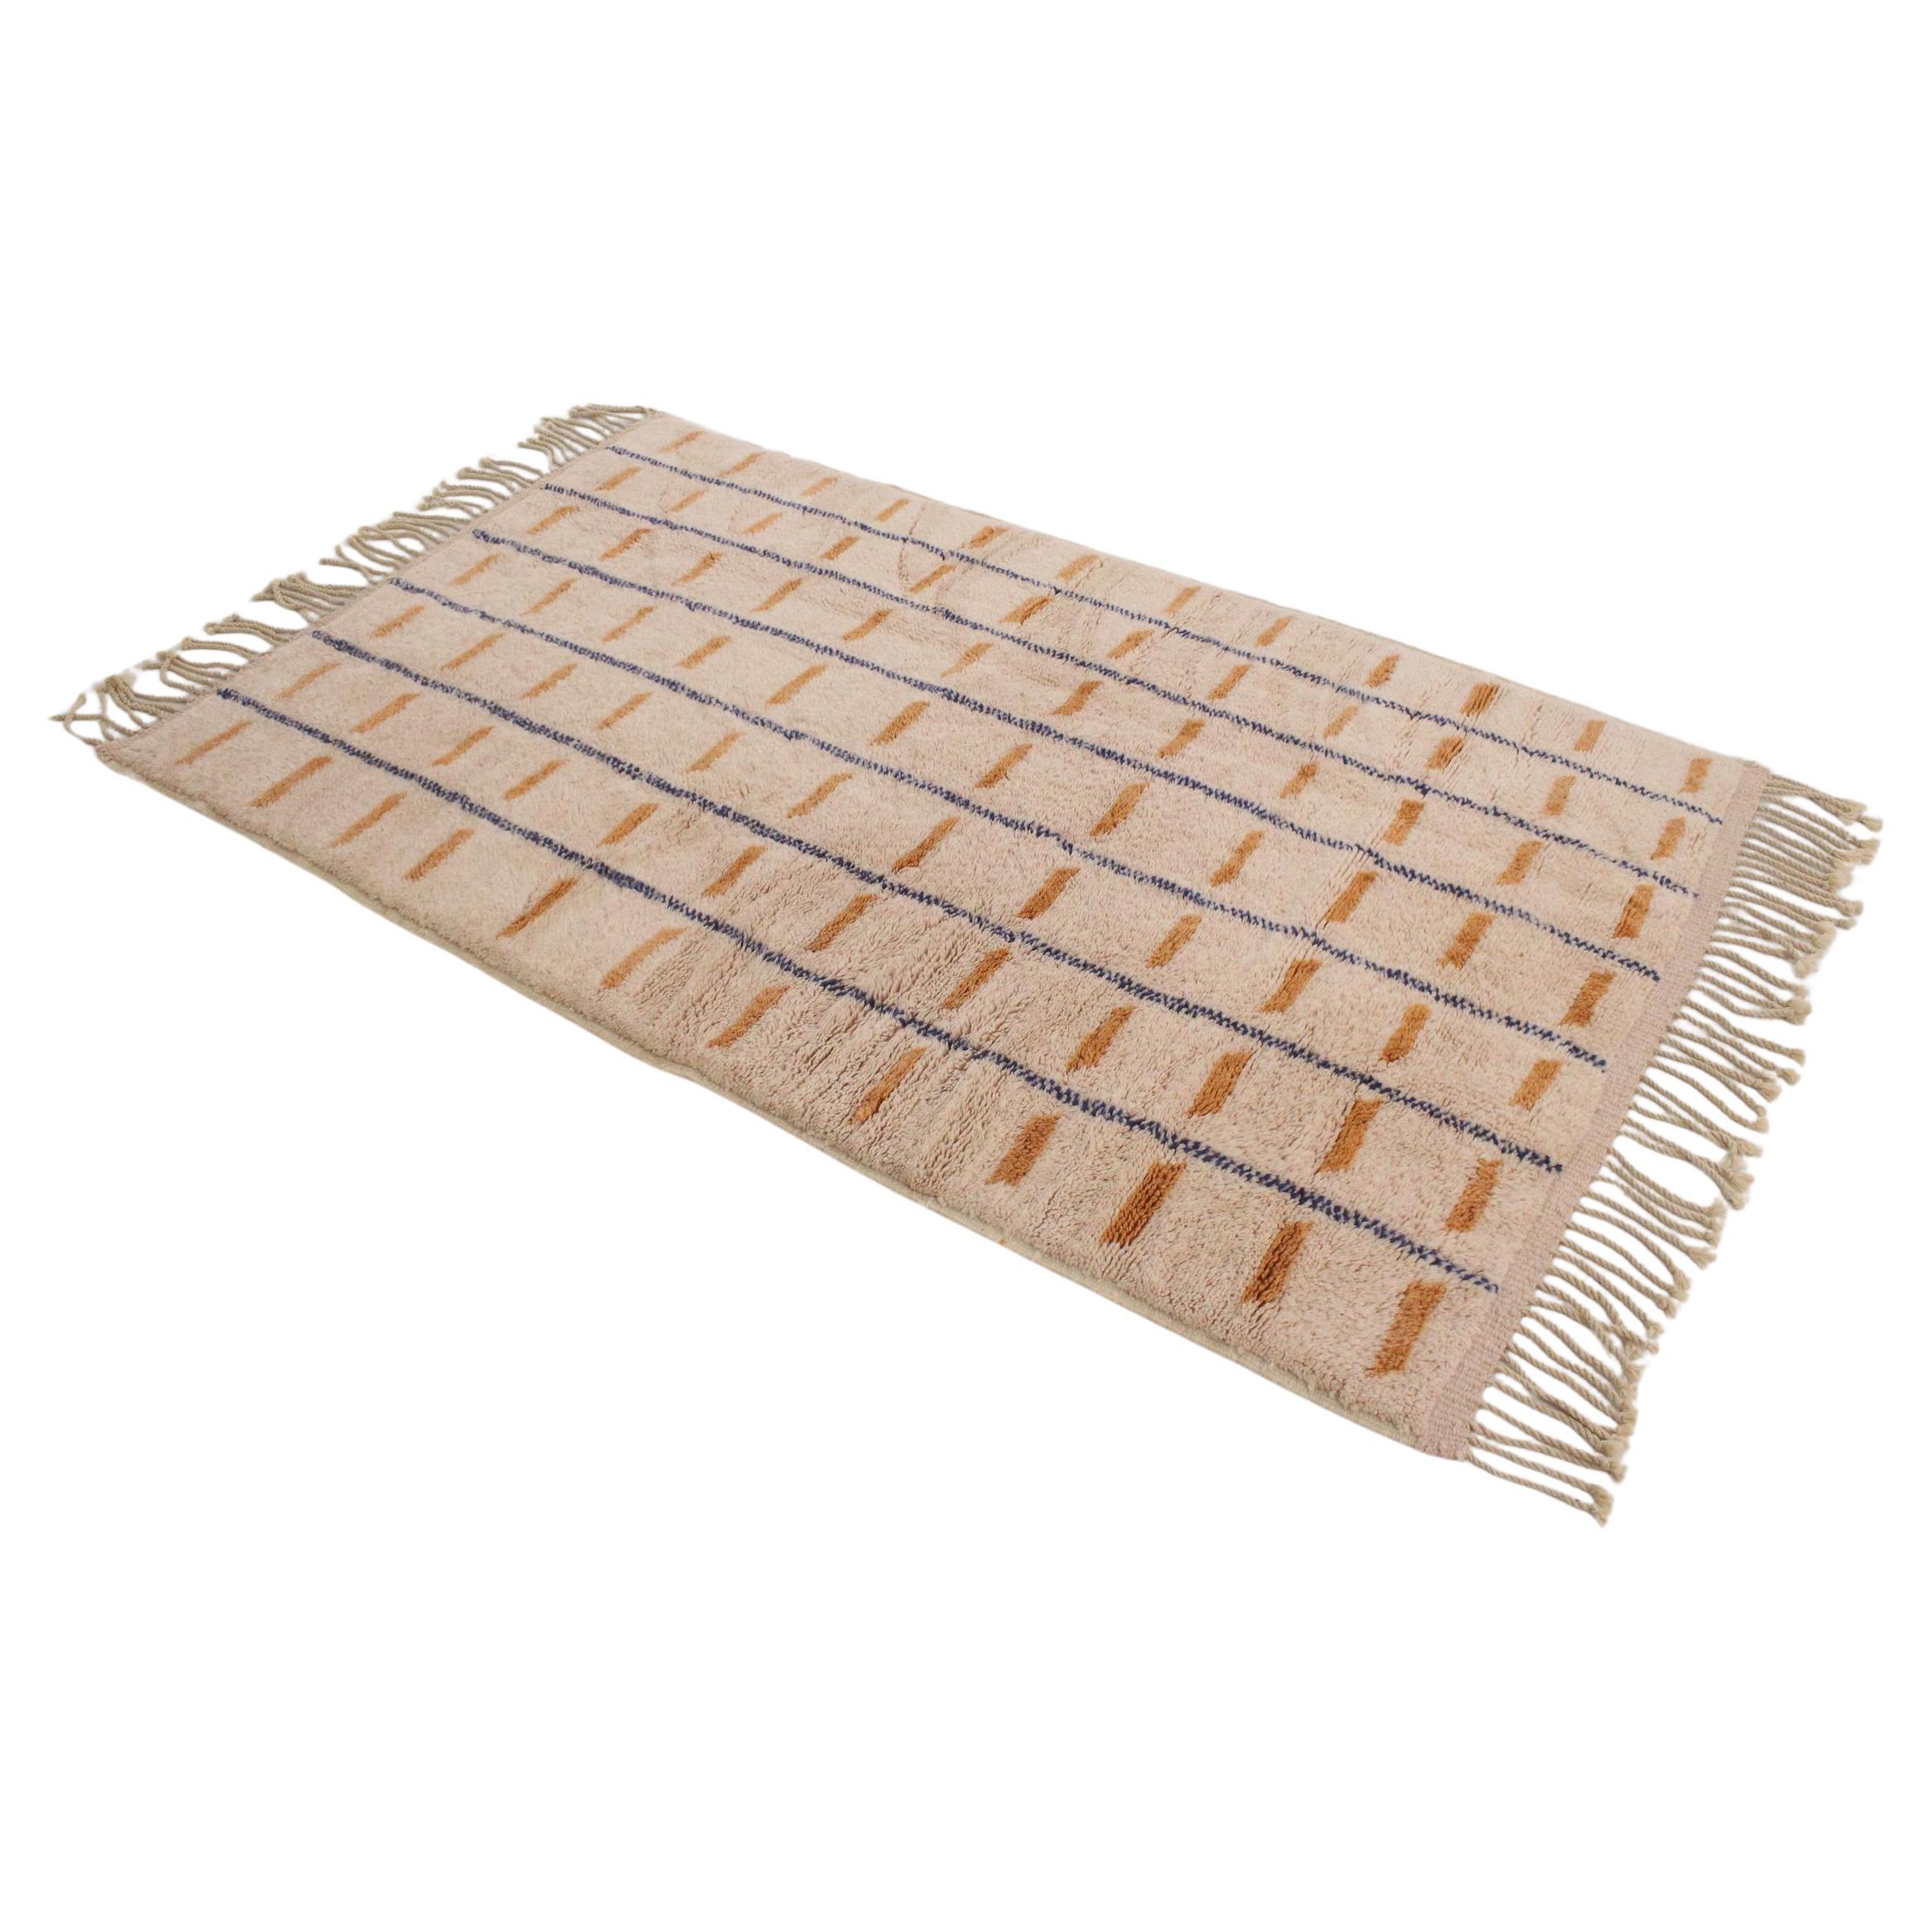 Modern Moroccan wool Mrirt rug - Powder pink/orange - 5x8.3feet / 155x255cm For Sale